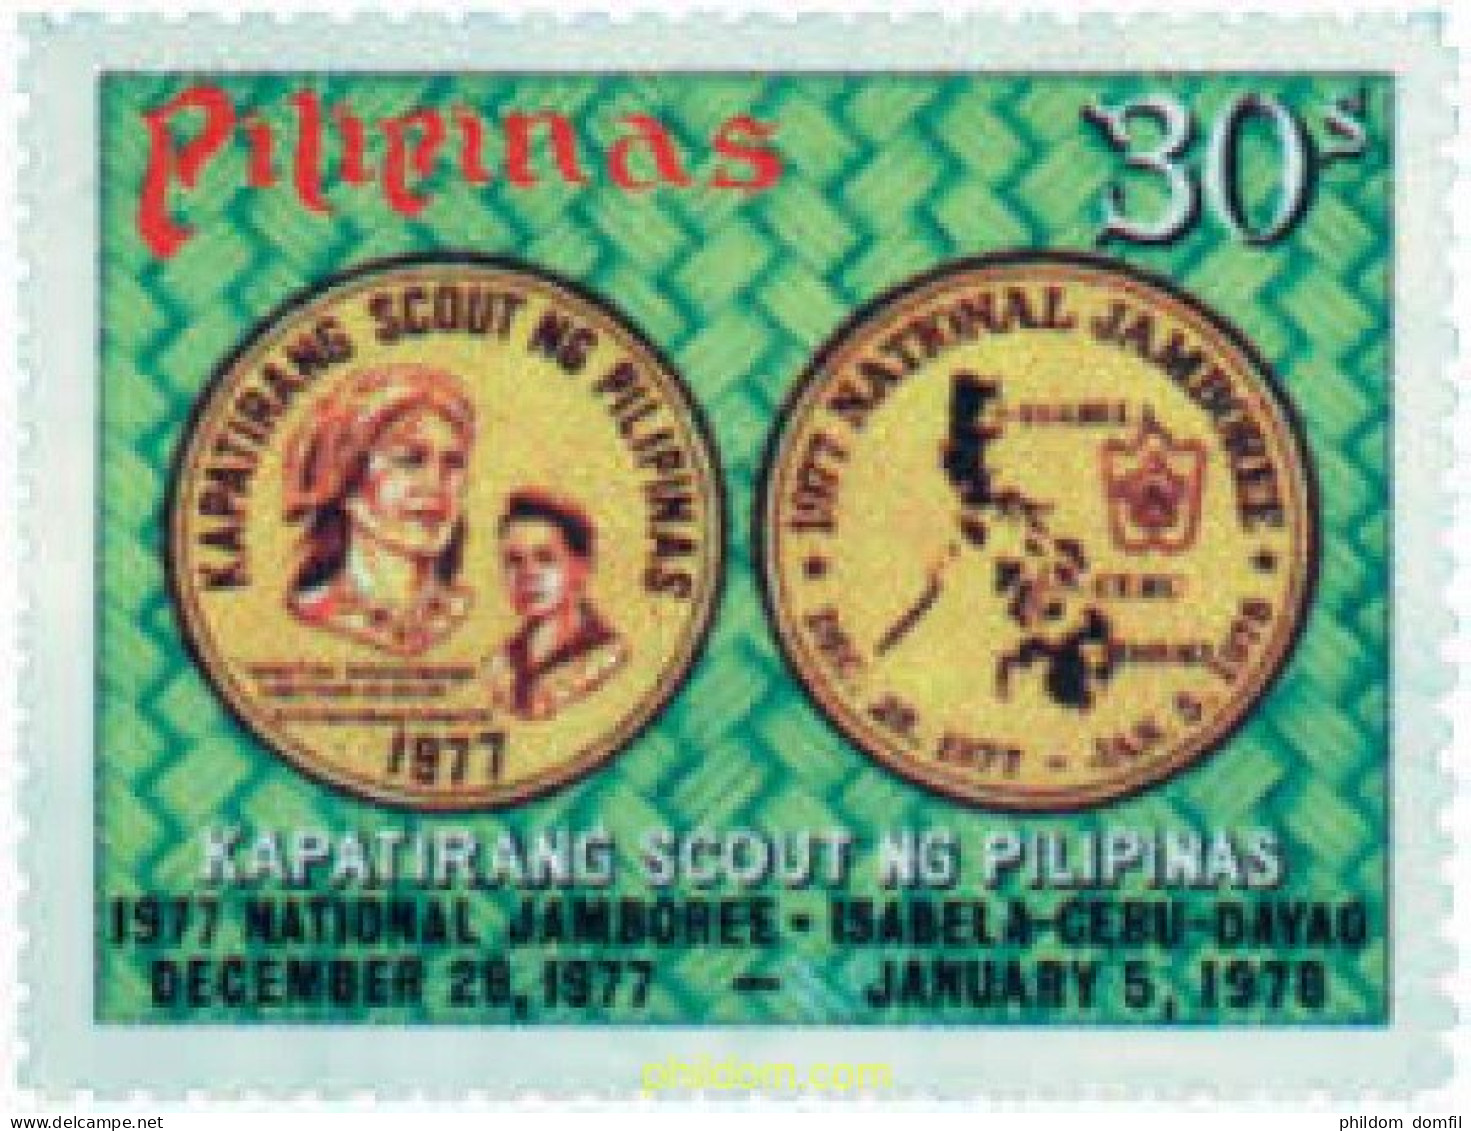 38354 MNH FILIPINAS 1977 JAMBOREE NACIONAL EN TUMAUINI - Philippines